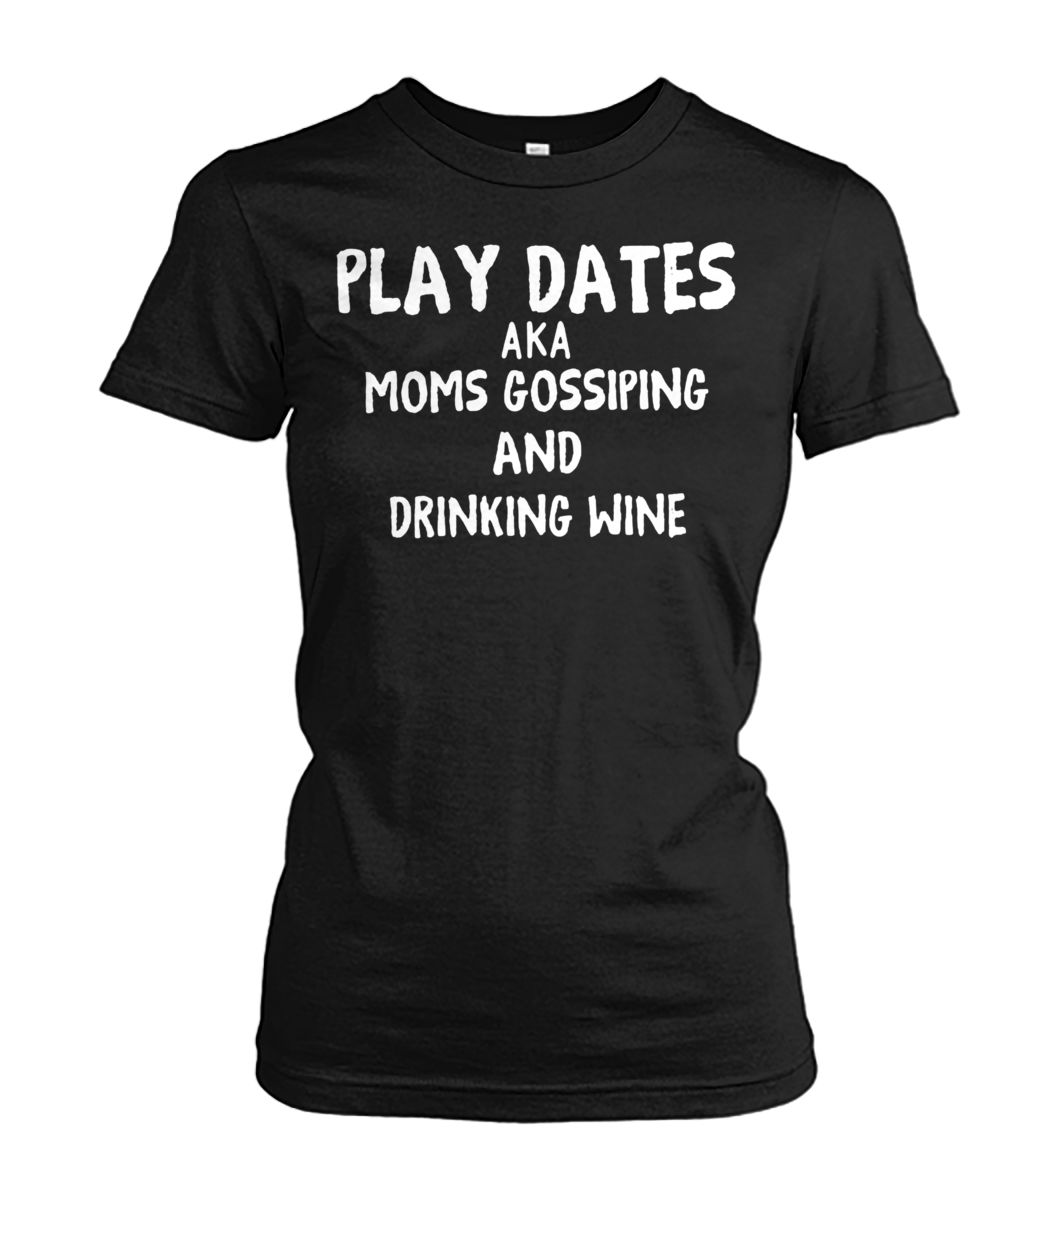 Play dates aka moms gossiping and drinking wine women's crew tee